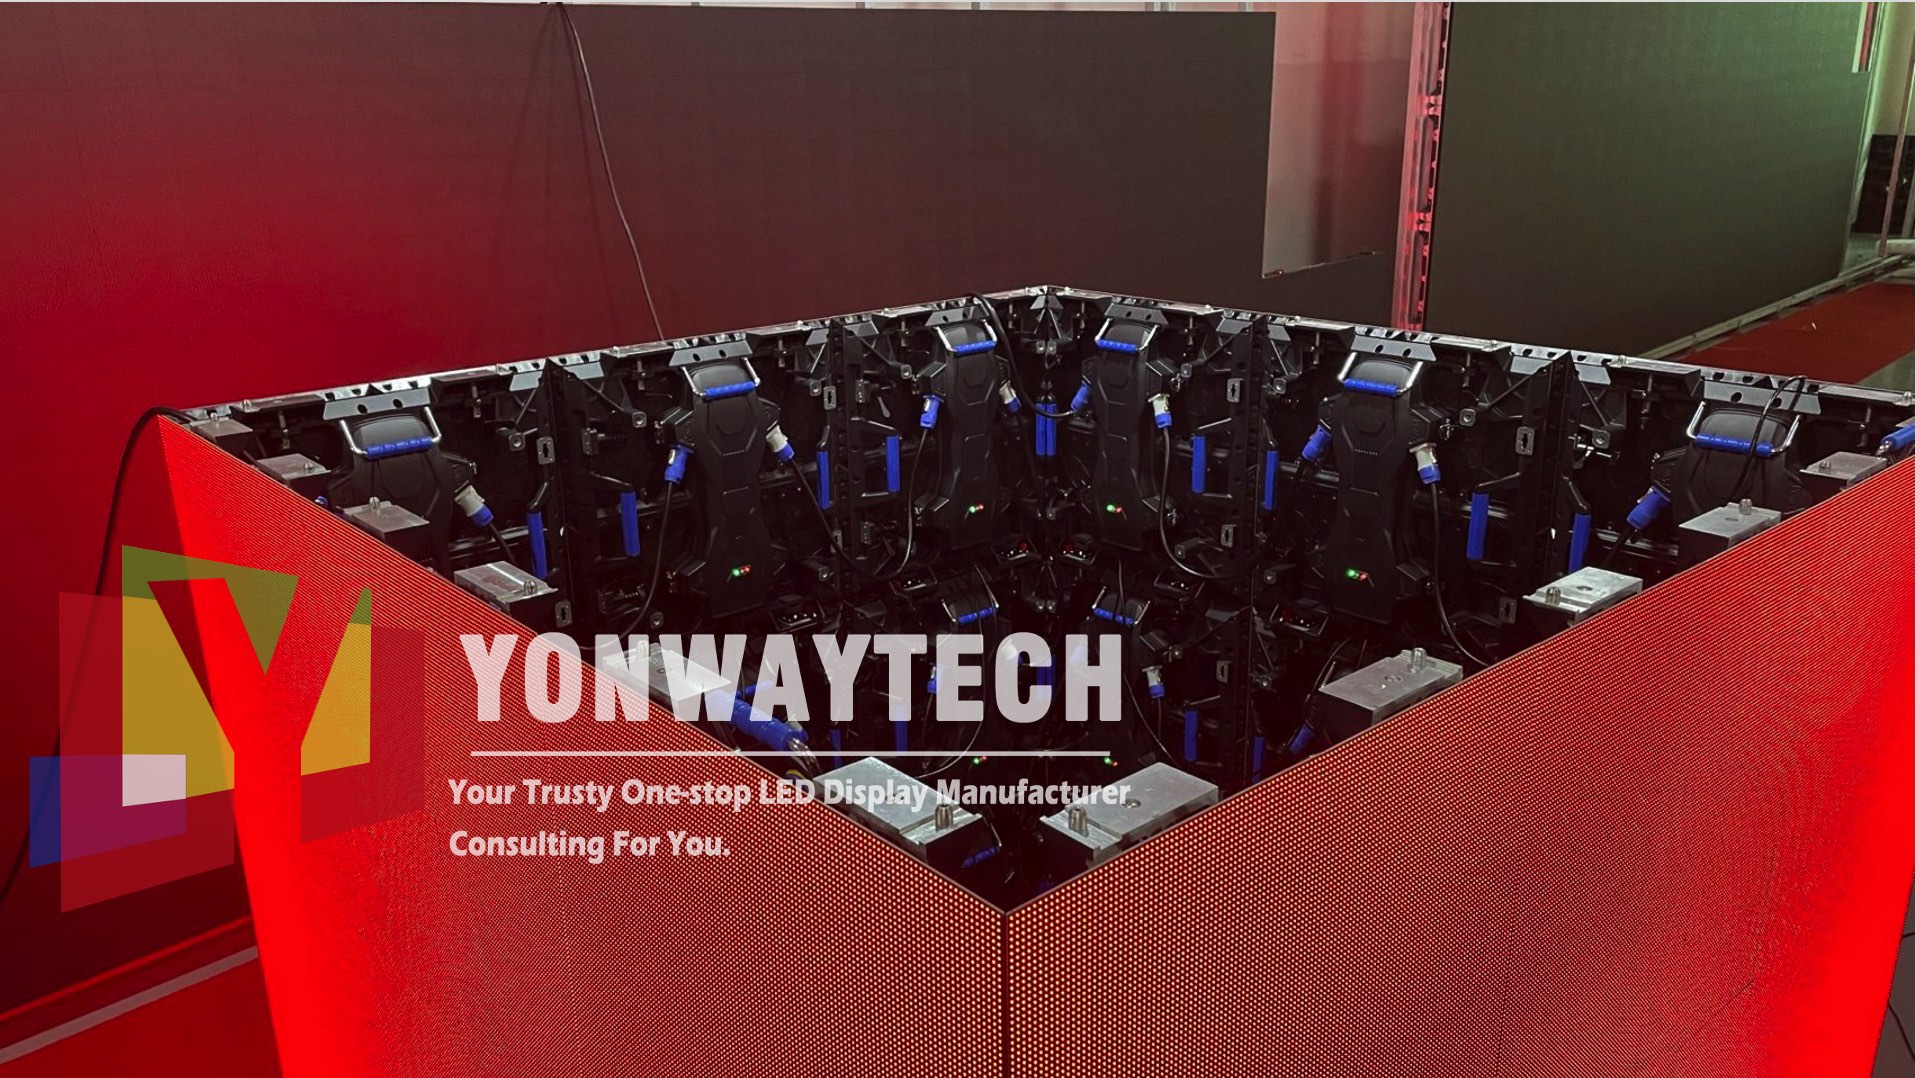 Tovarna LED zaslonov Yonwaytech p2.976 p3.91 v desnem kotu